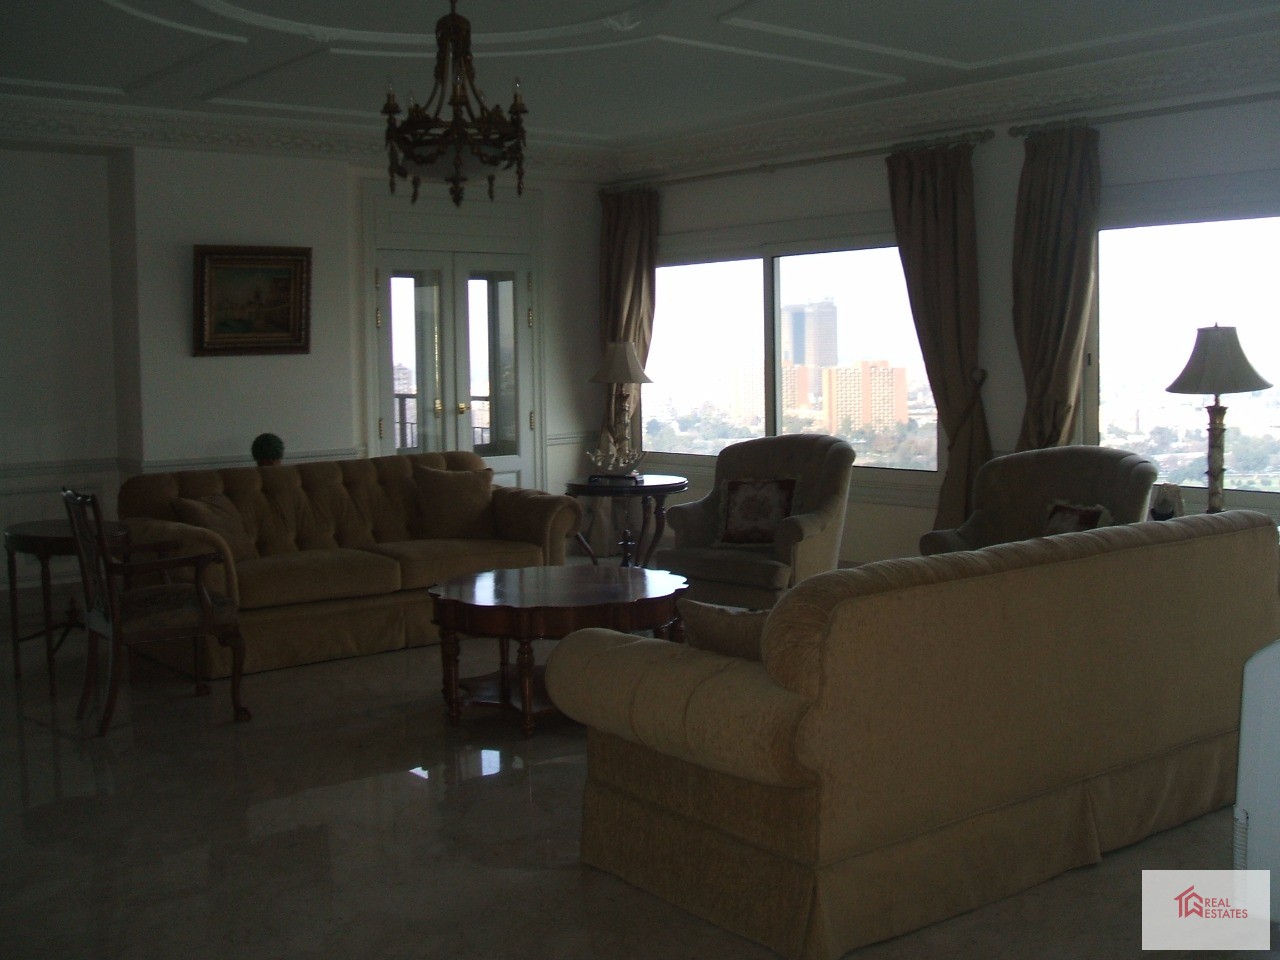 Apartment rent Agouza Distract overlooking Nile Panramic View나일강 전경이 내려다보이는 아파트 임대 Agouza District